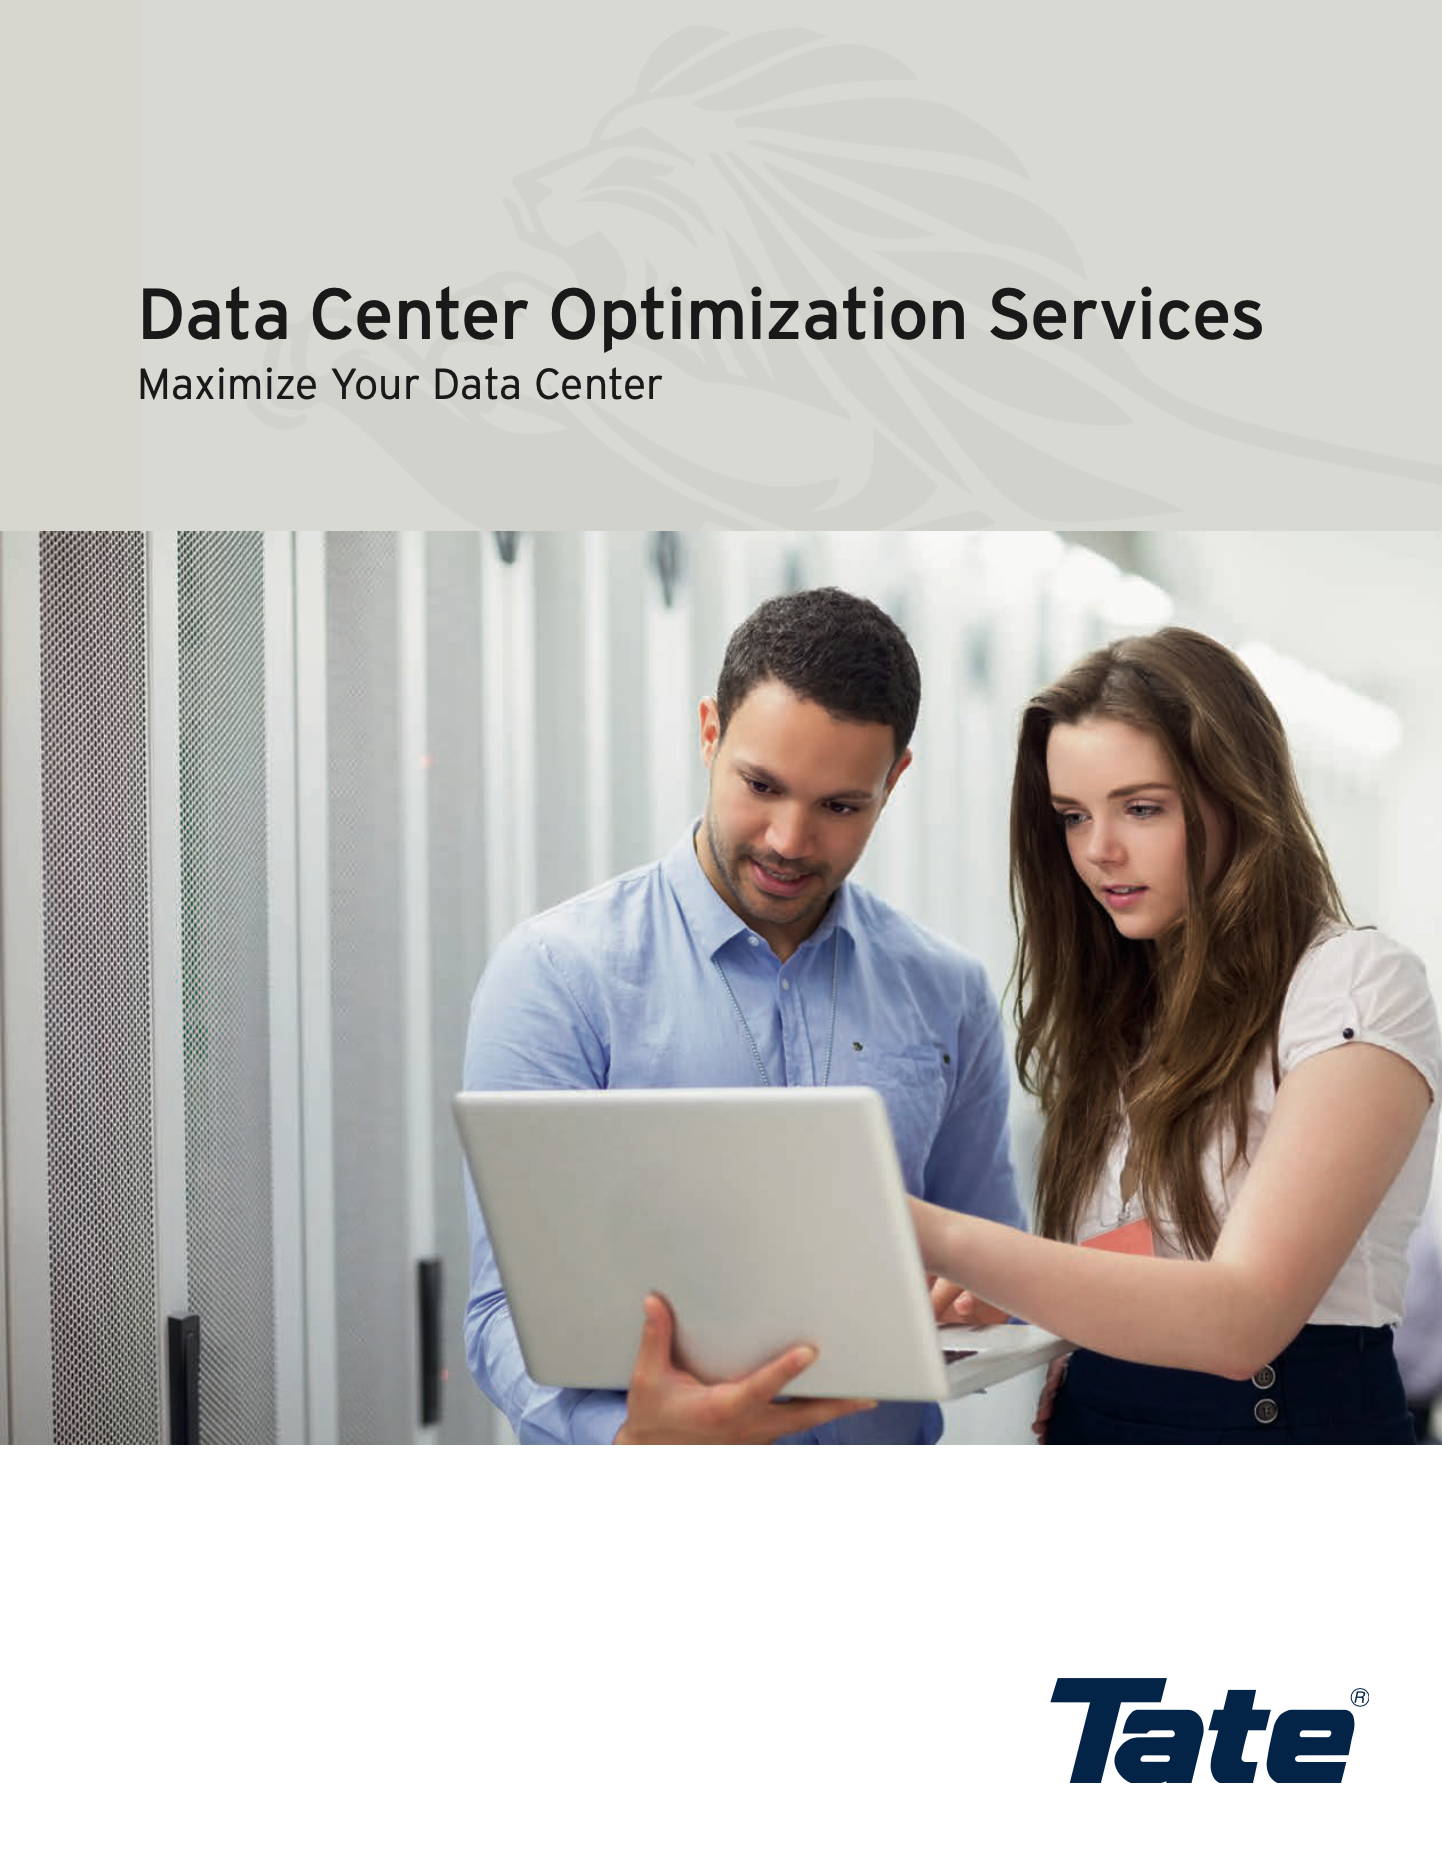 Tate Data Center Optimization Services Brochure